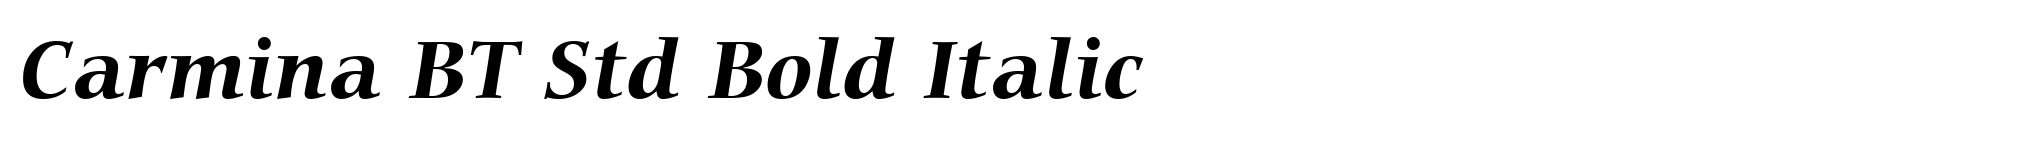 Carmina BT Std Bold Italic image